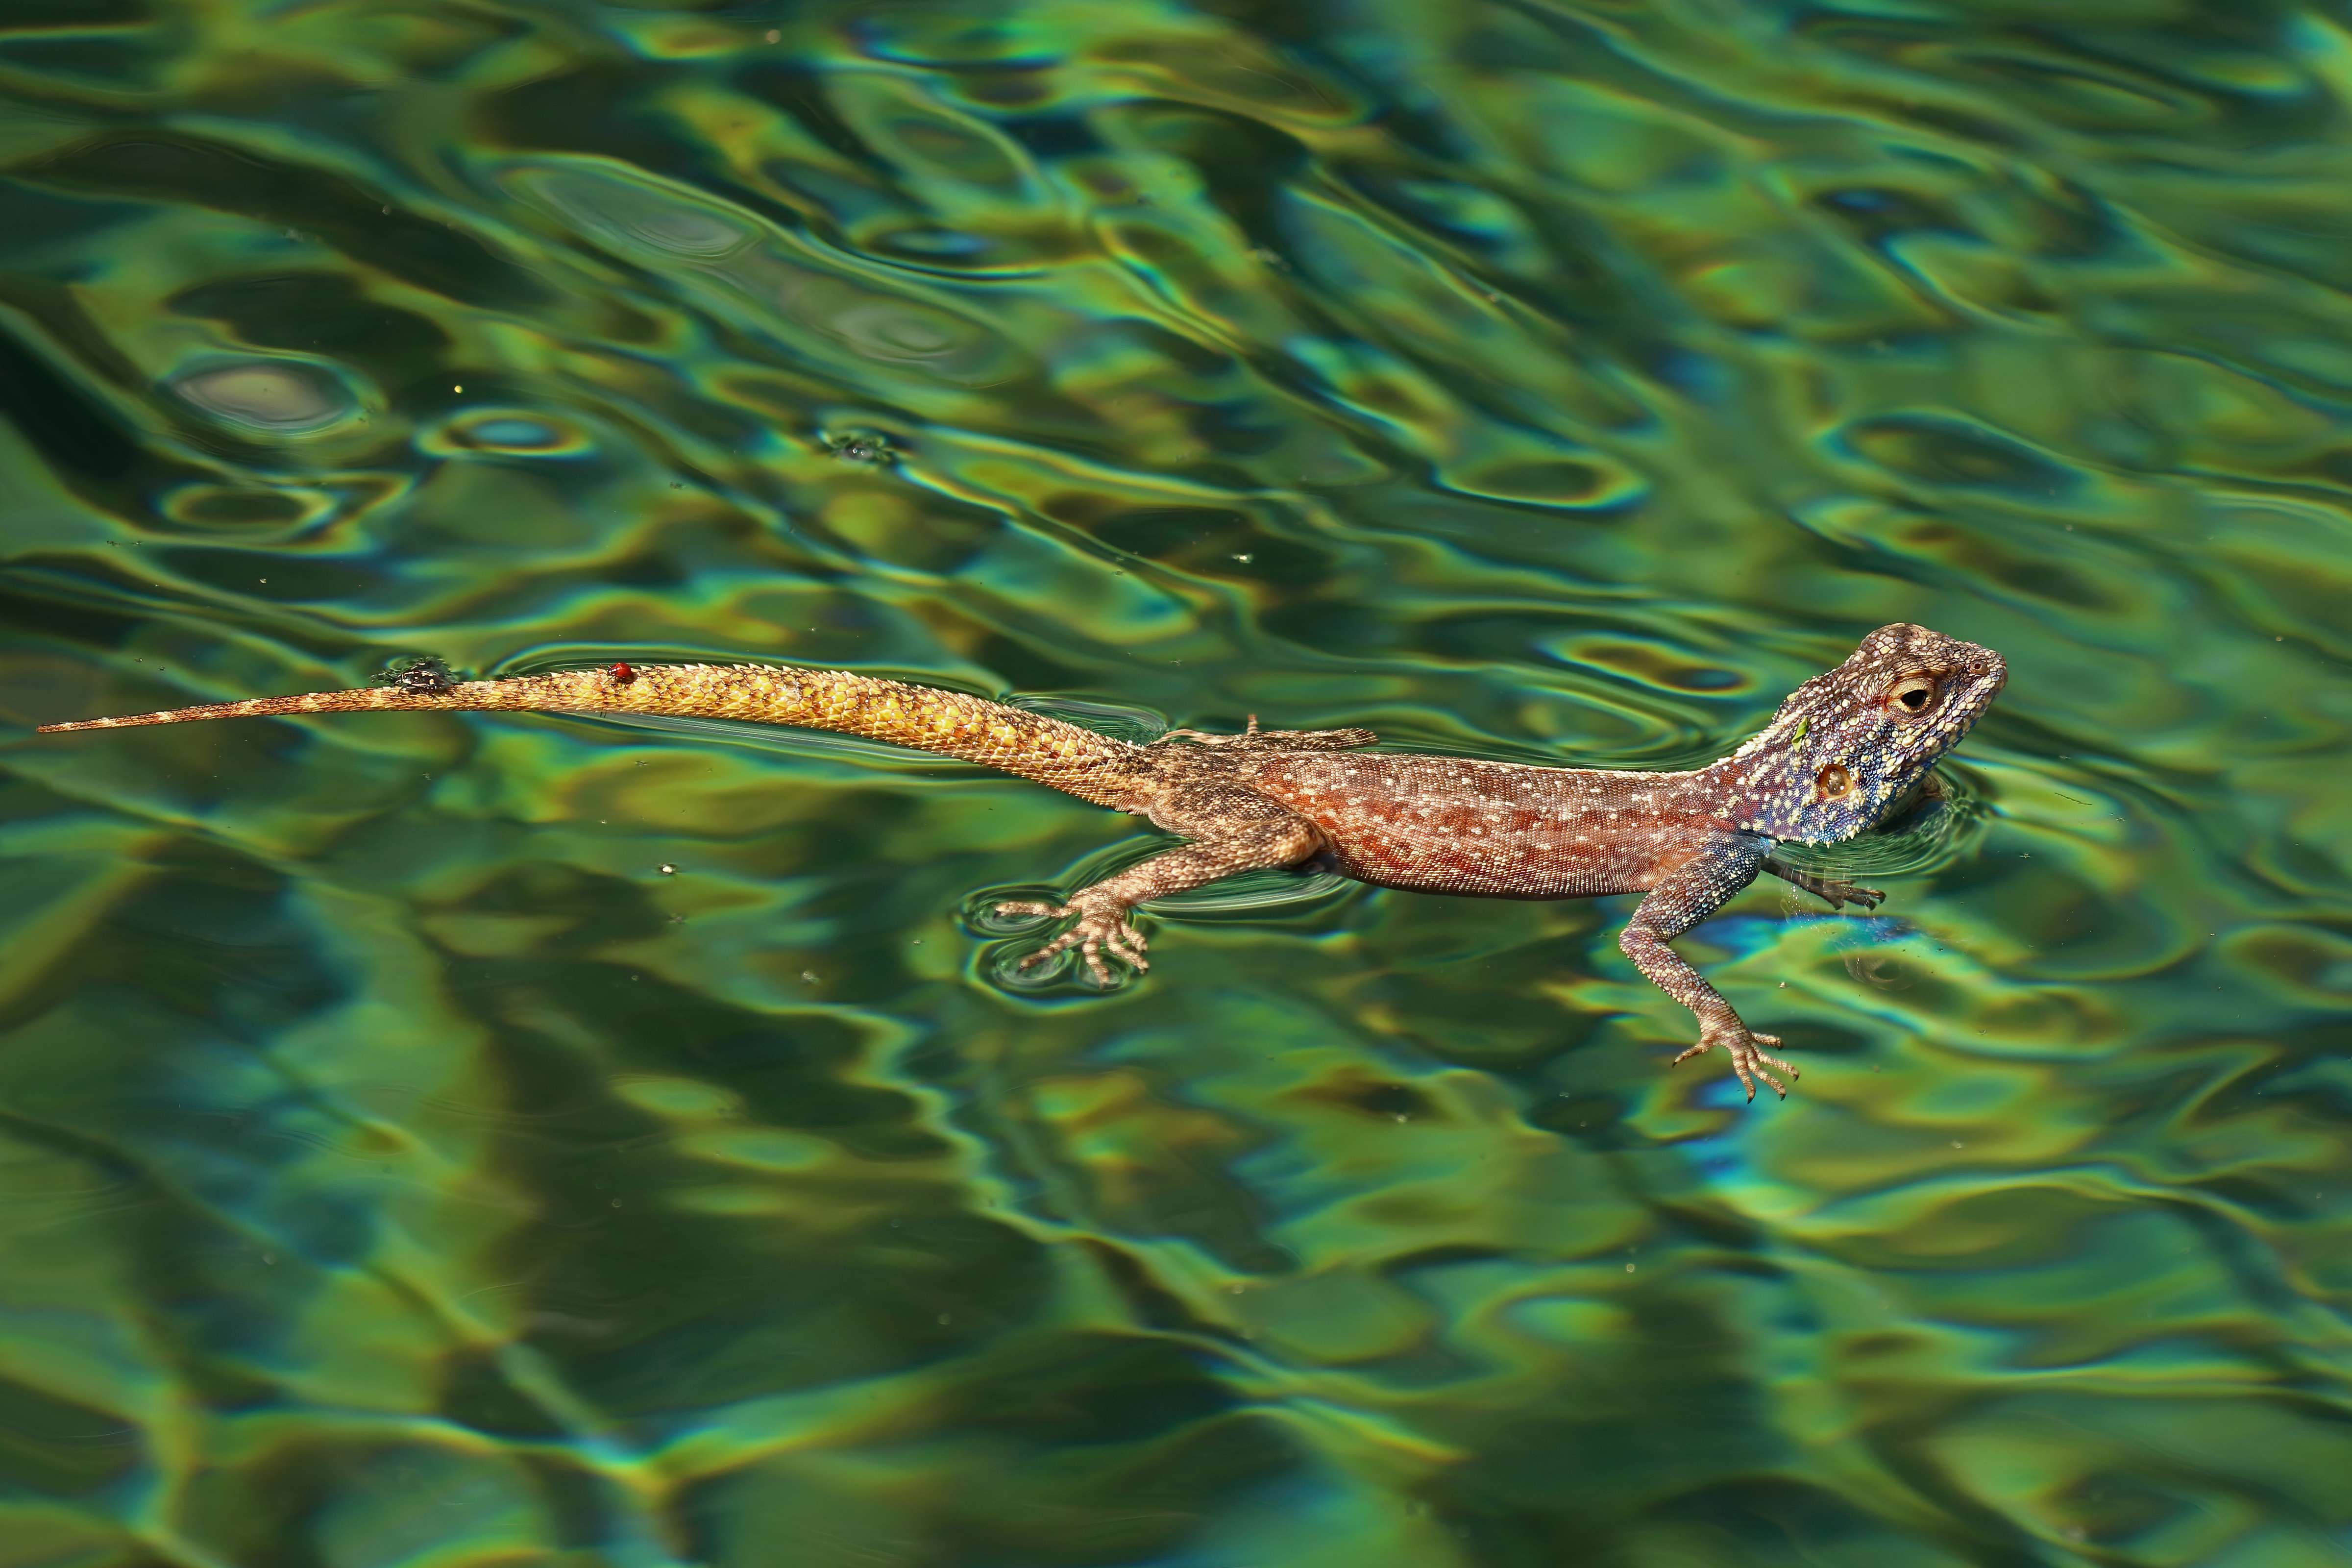 File:Ground agama (Agama aculeata) in water.jpg - Wikimedia Commons